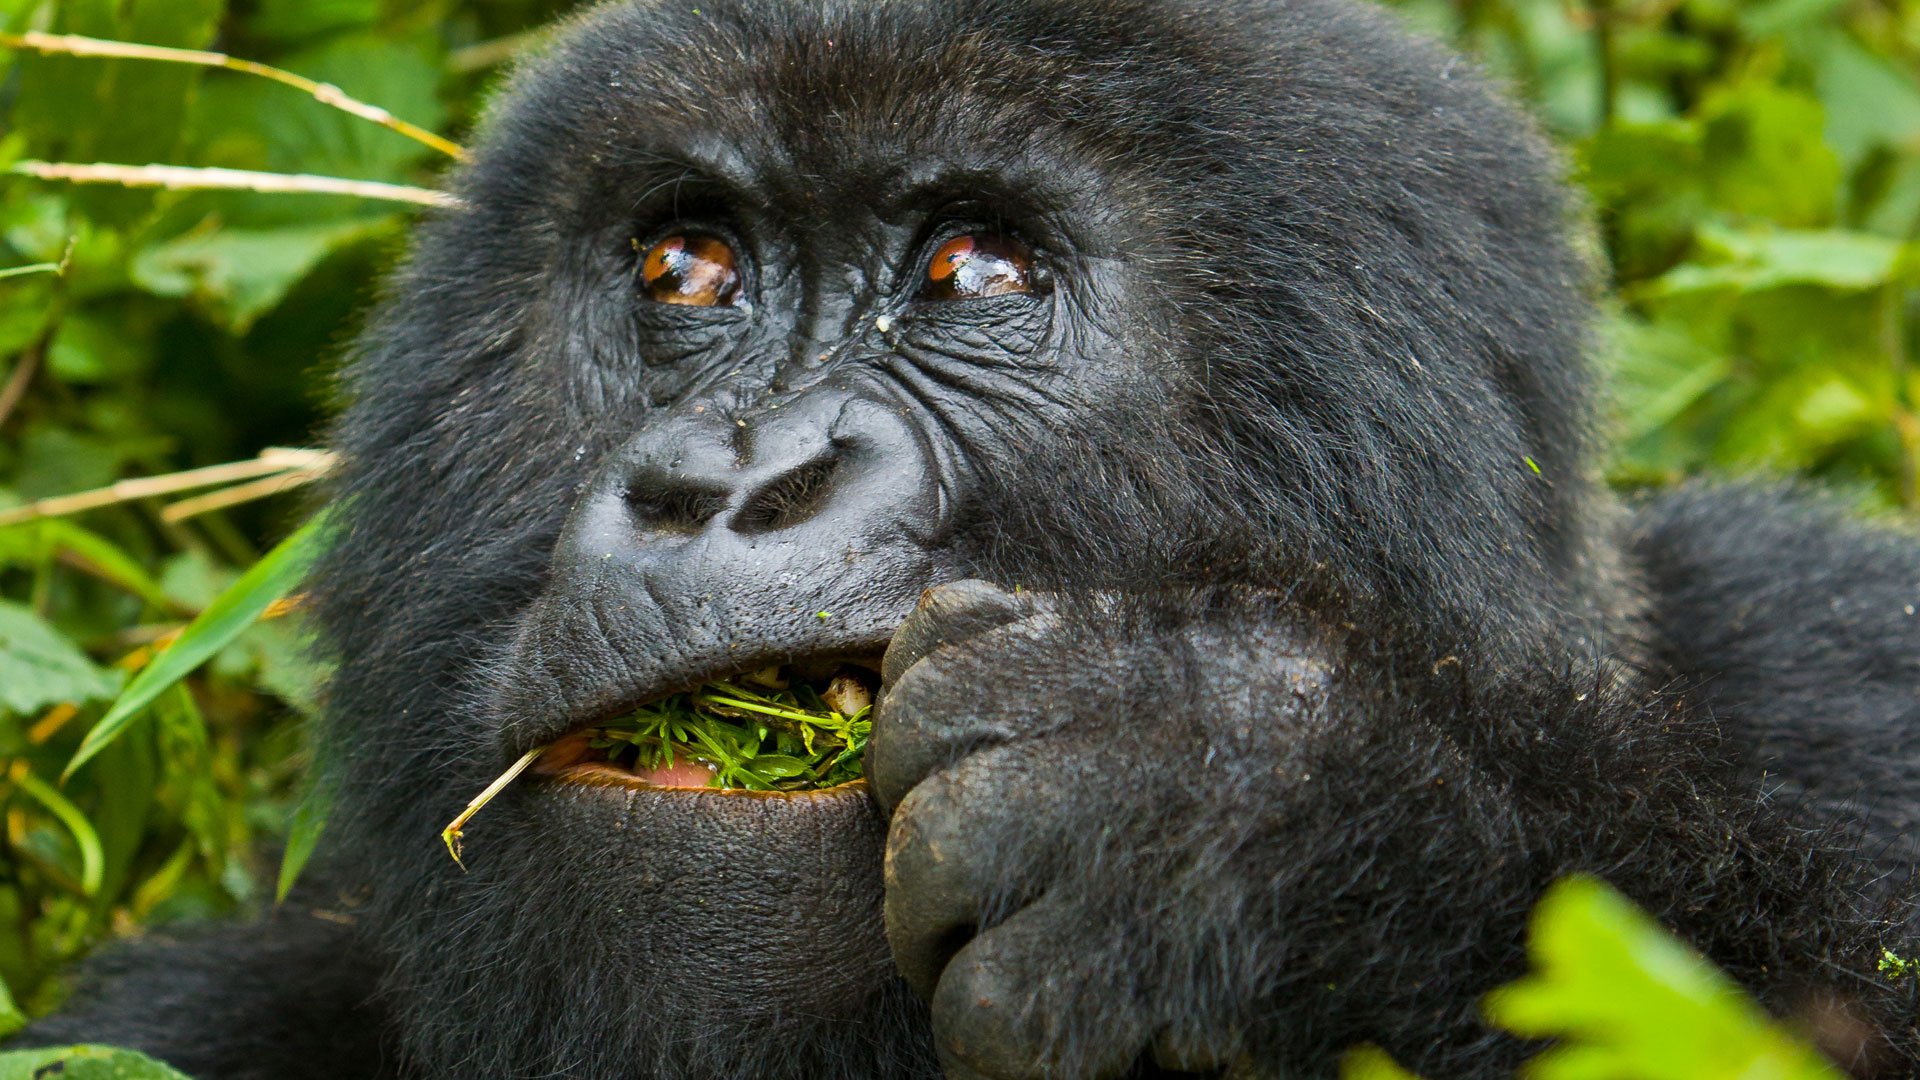 Ruhija Gorilla trekking sector in Bwindi Impenetrable Forest National Park